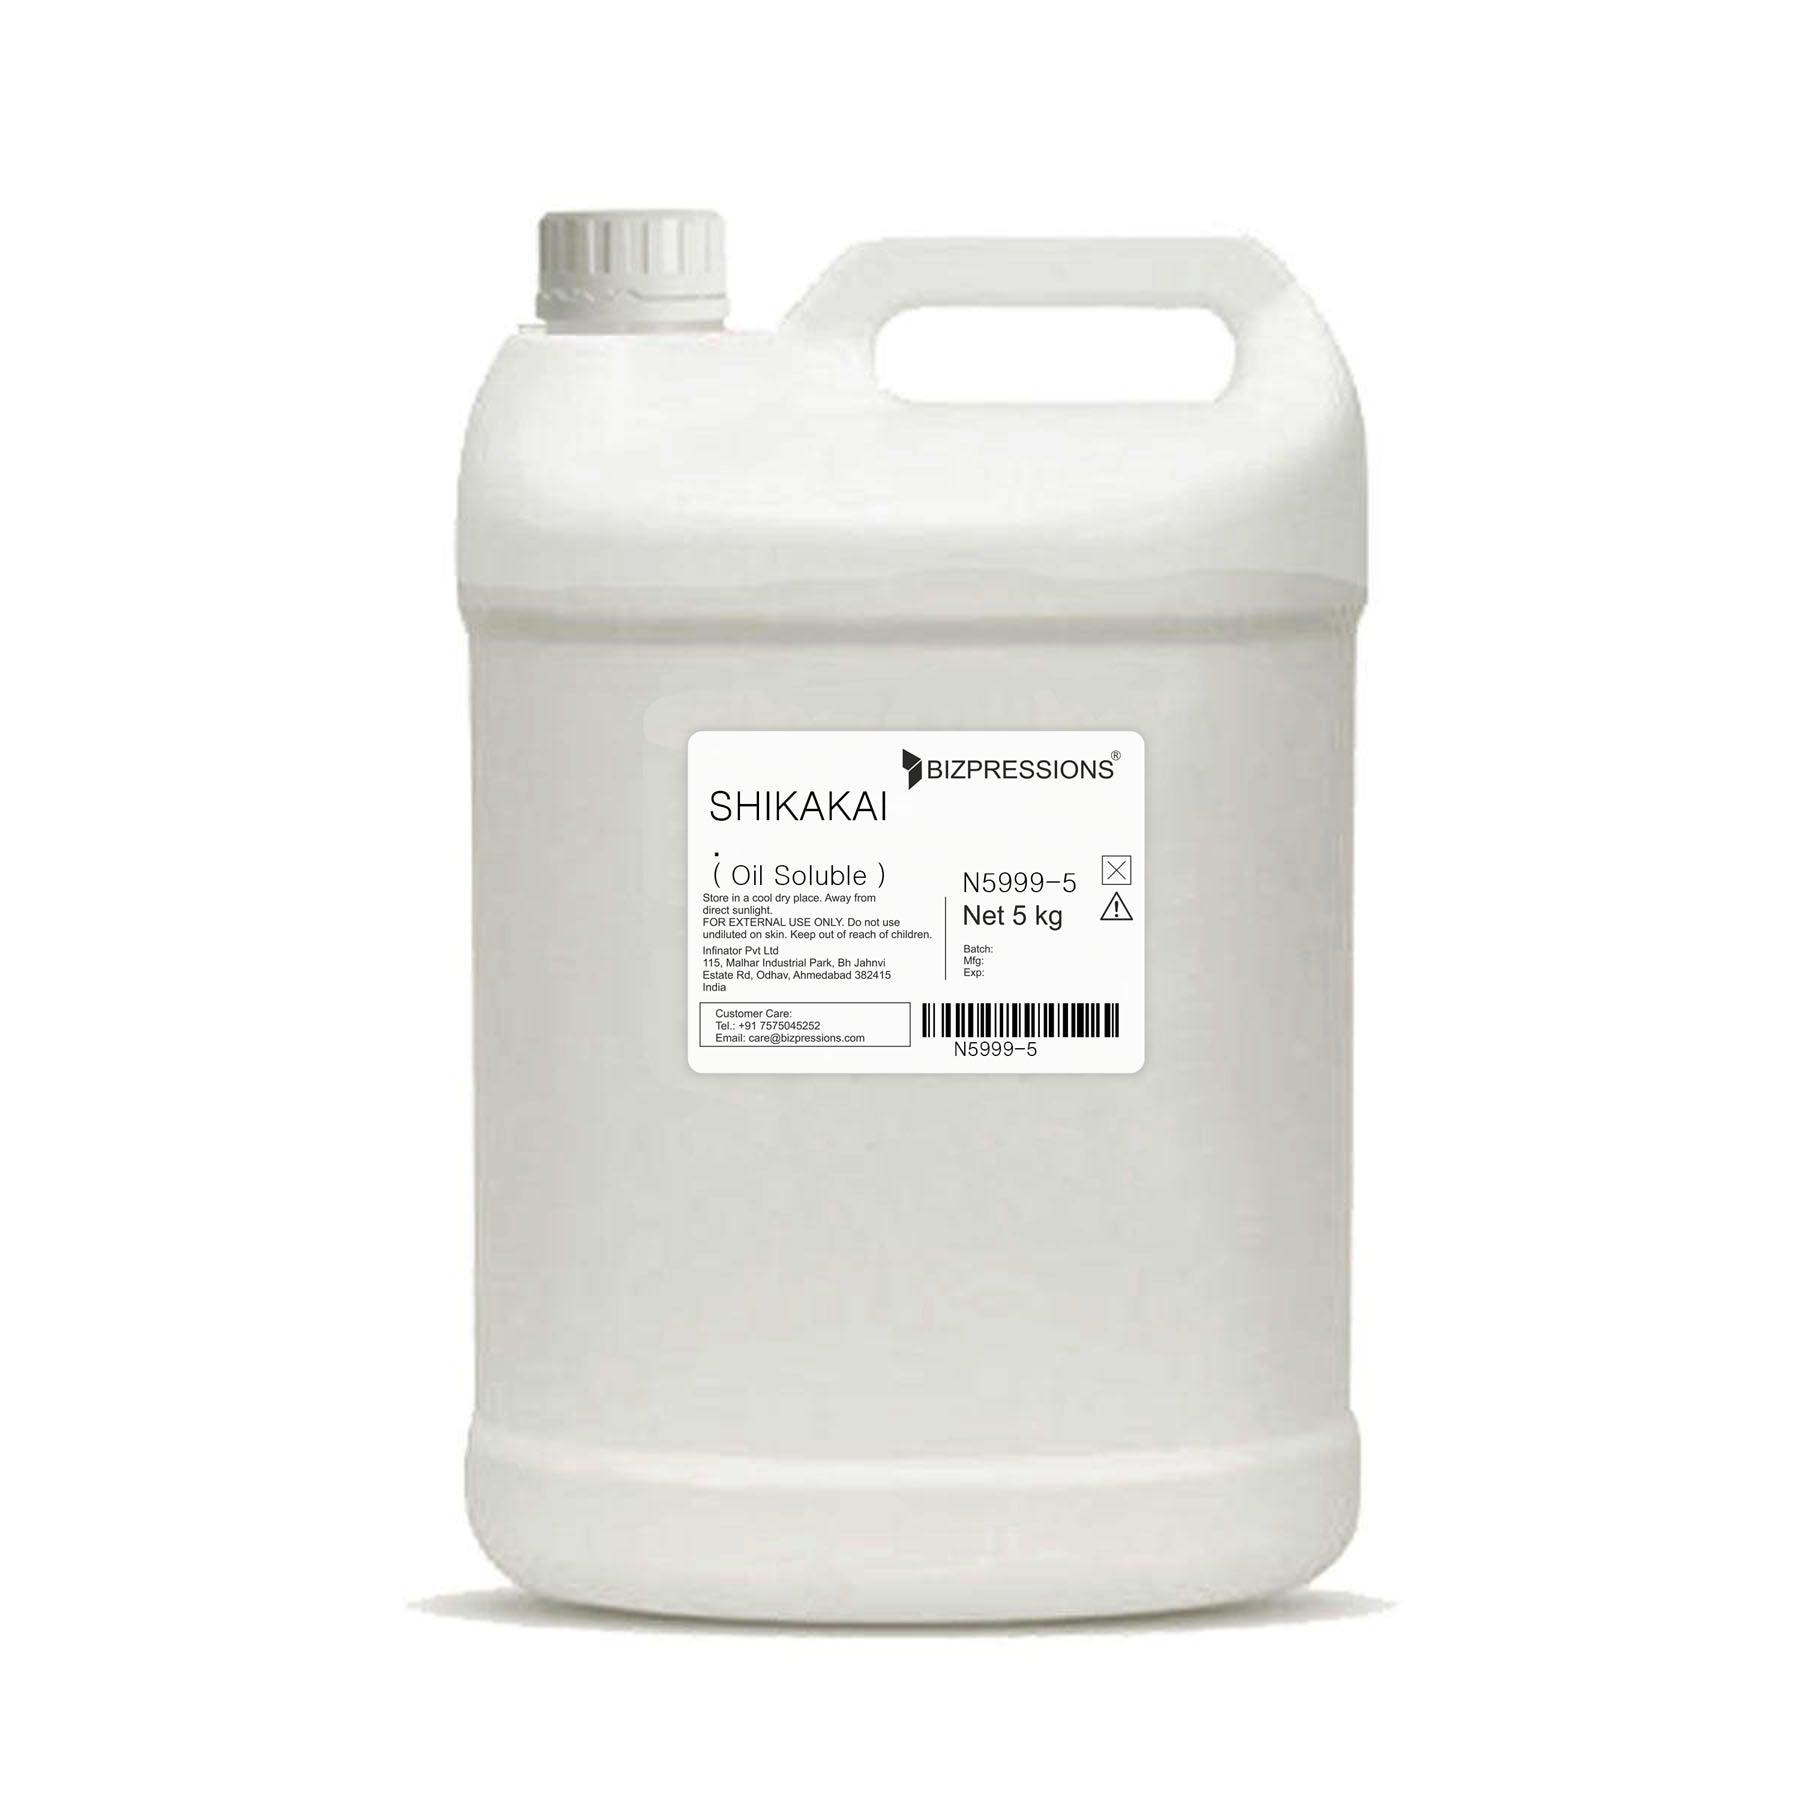 SHIKAKAI - Fragrance ( Oil Soluble ) - 5 kg